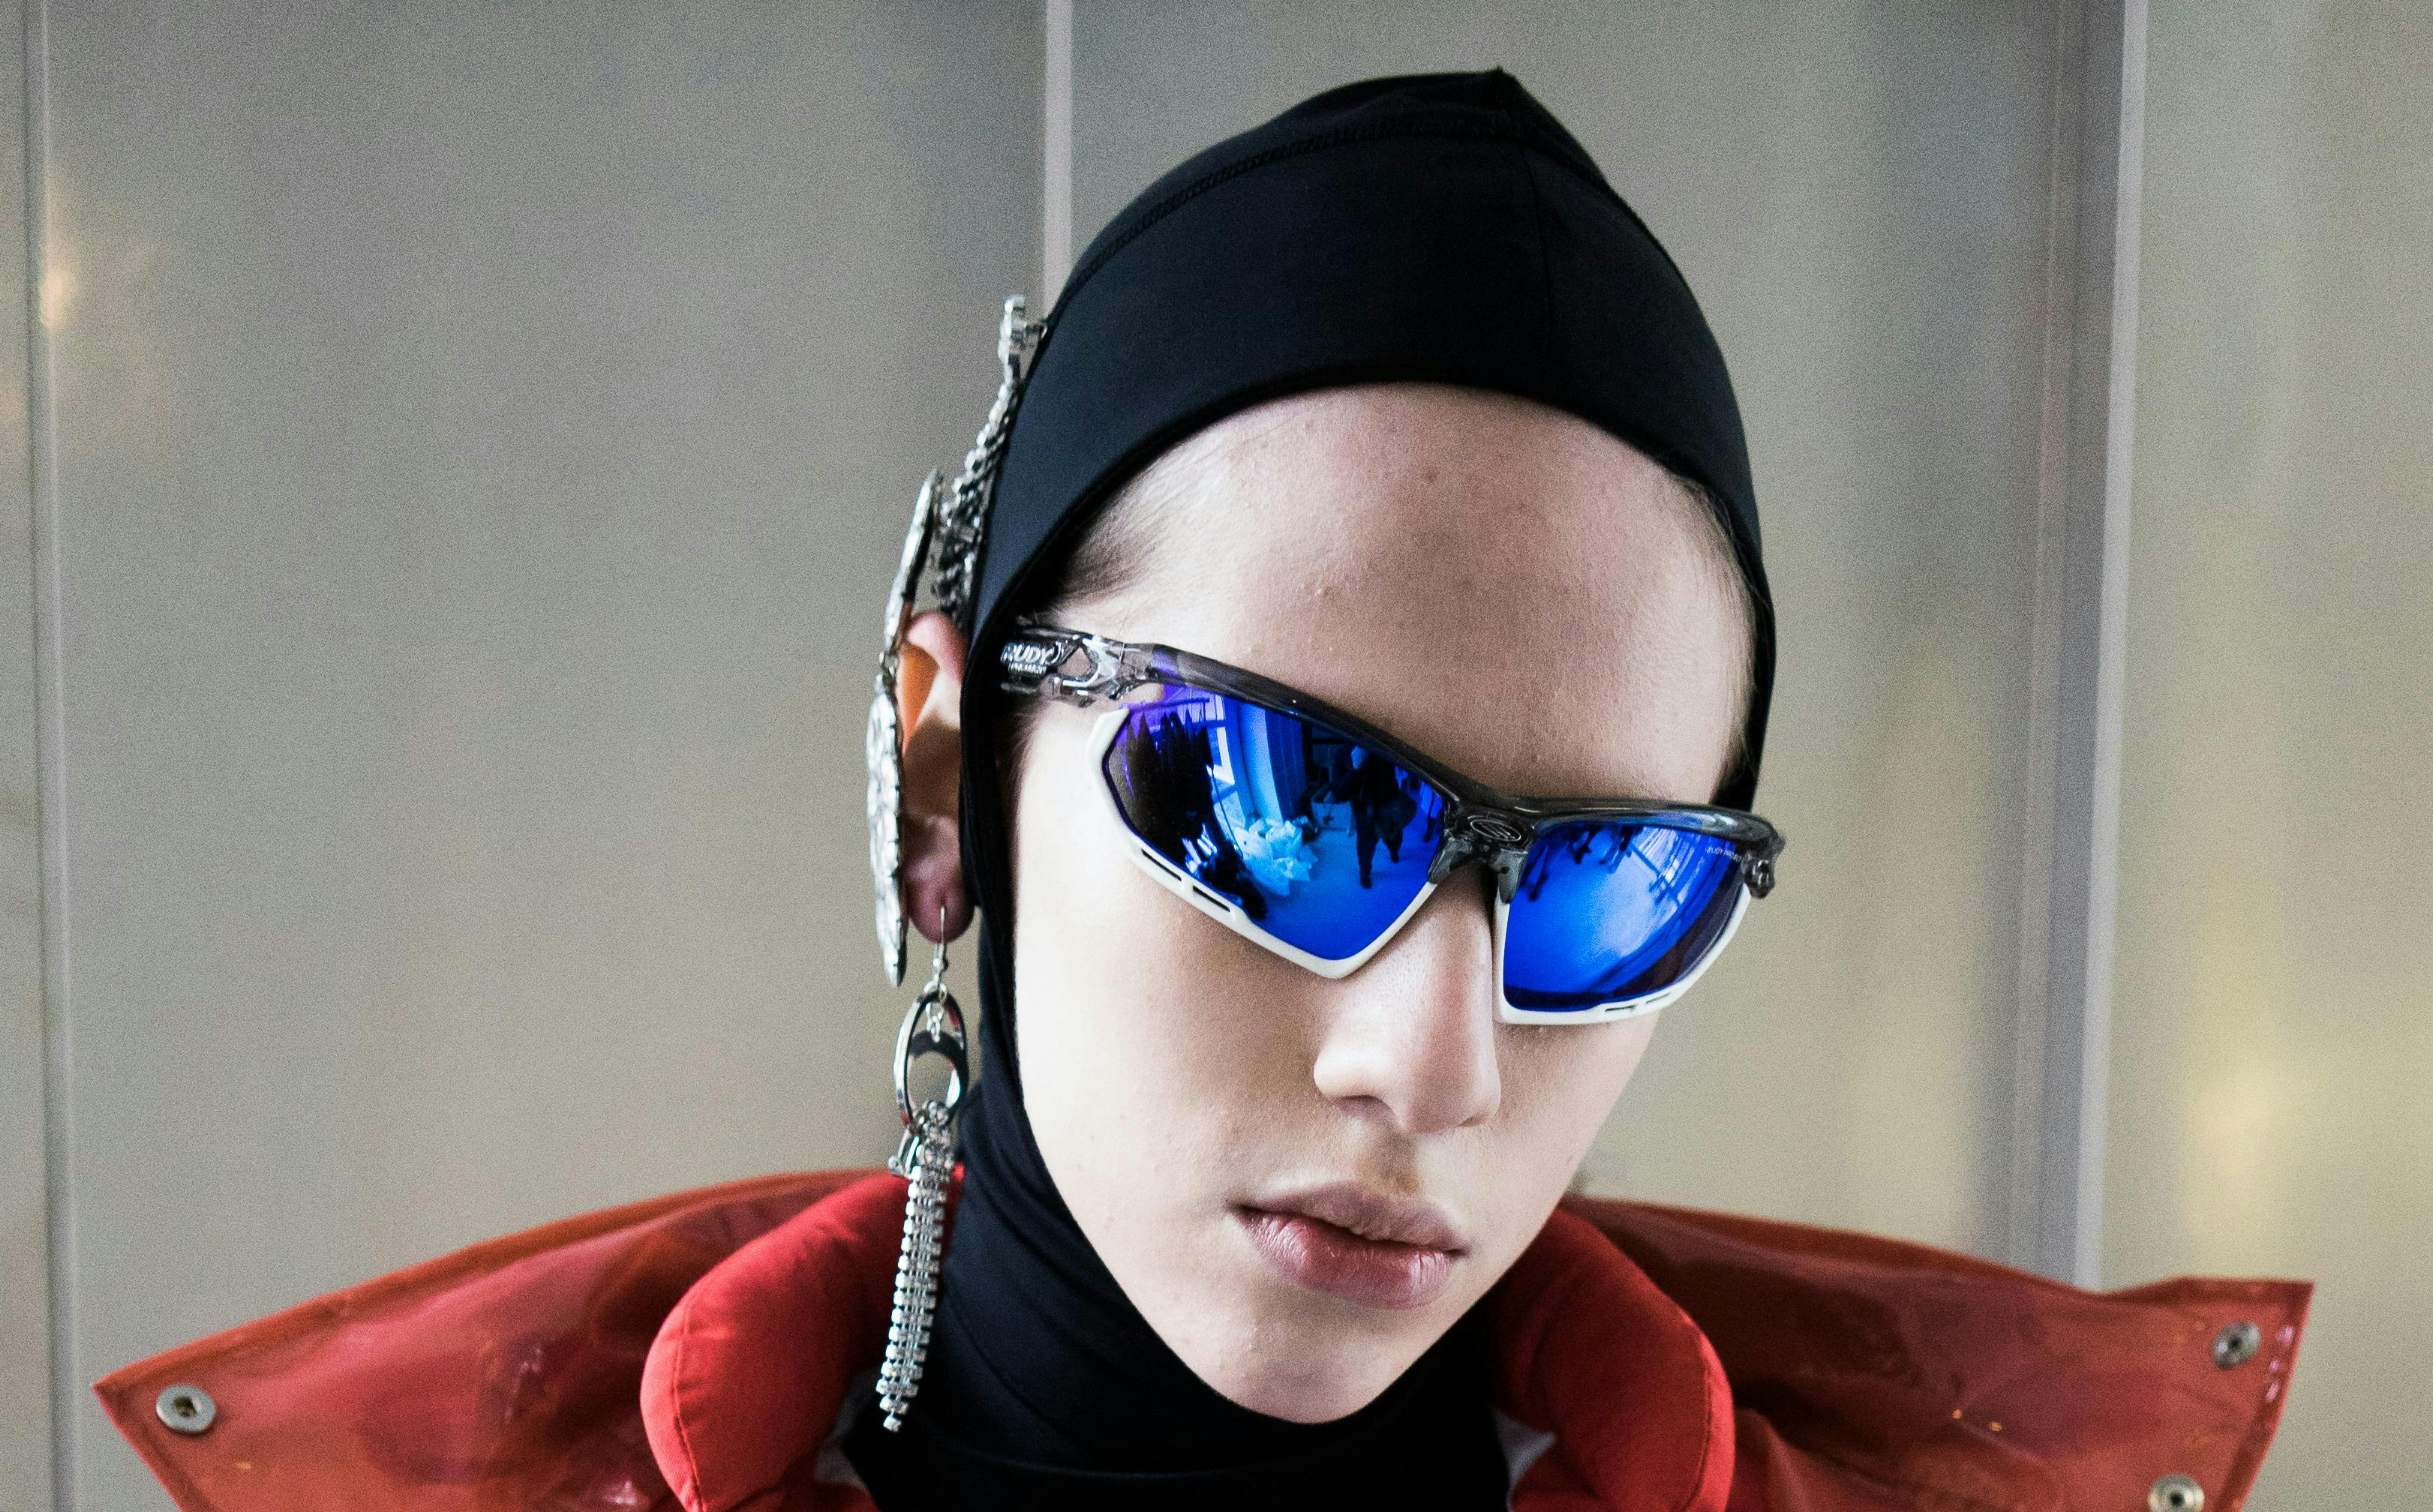 paris sunglasses accessories accessory clothing apparel person human